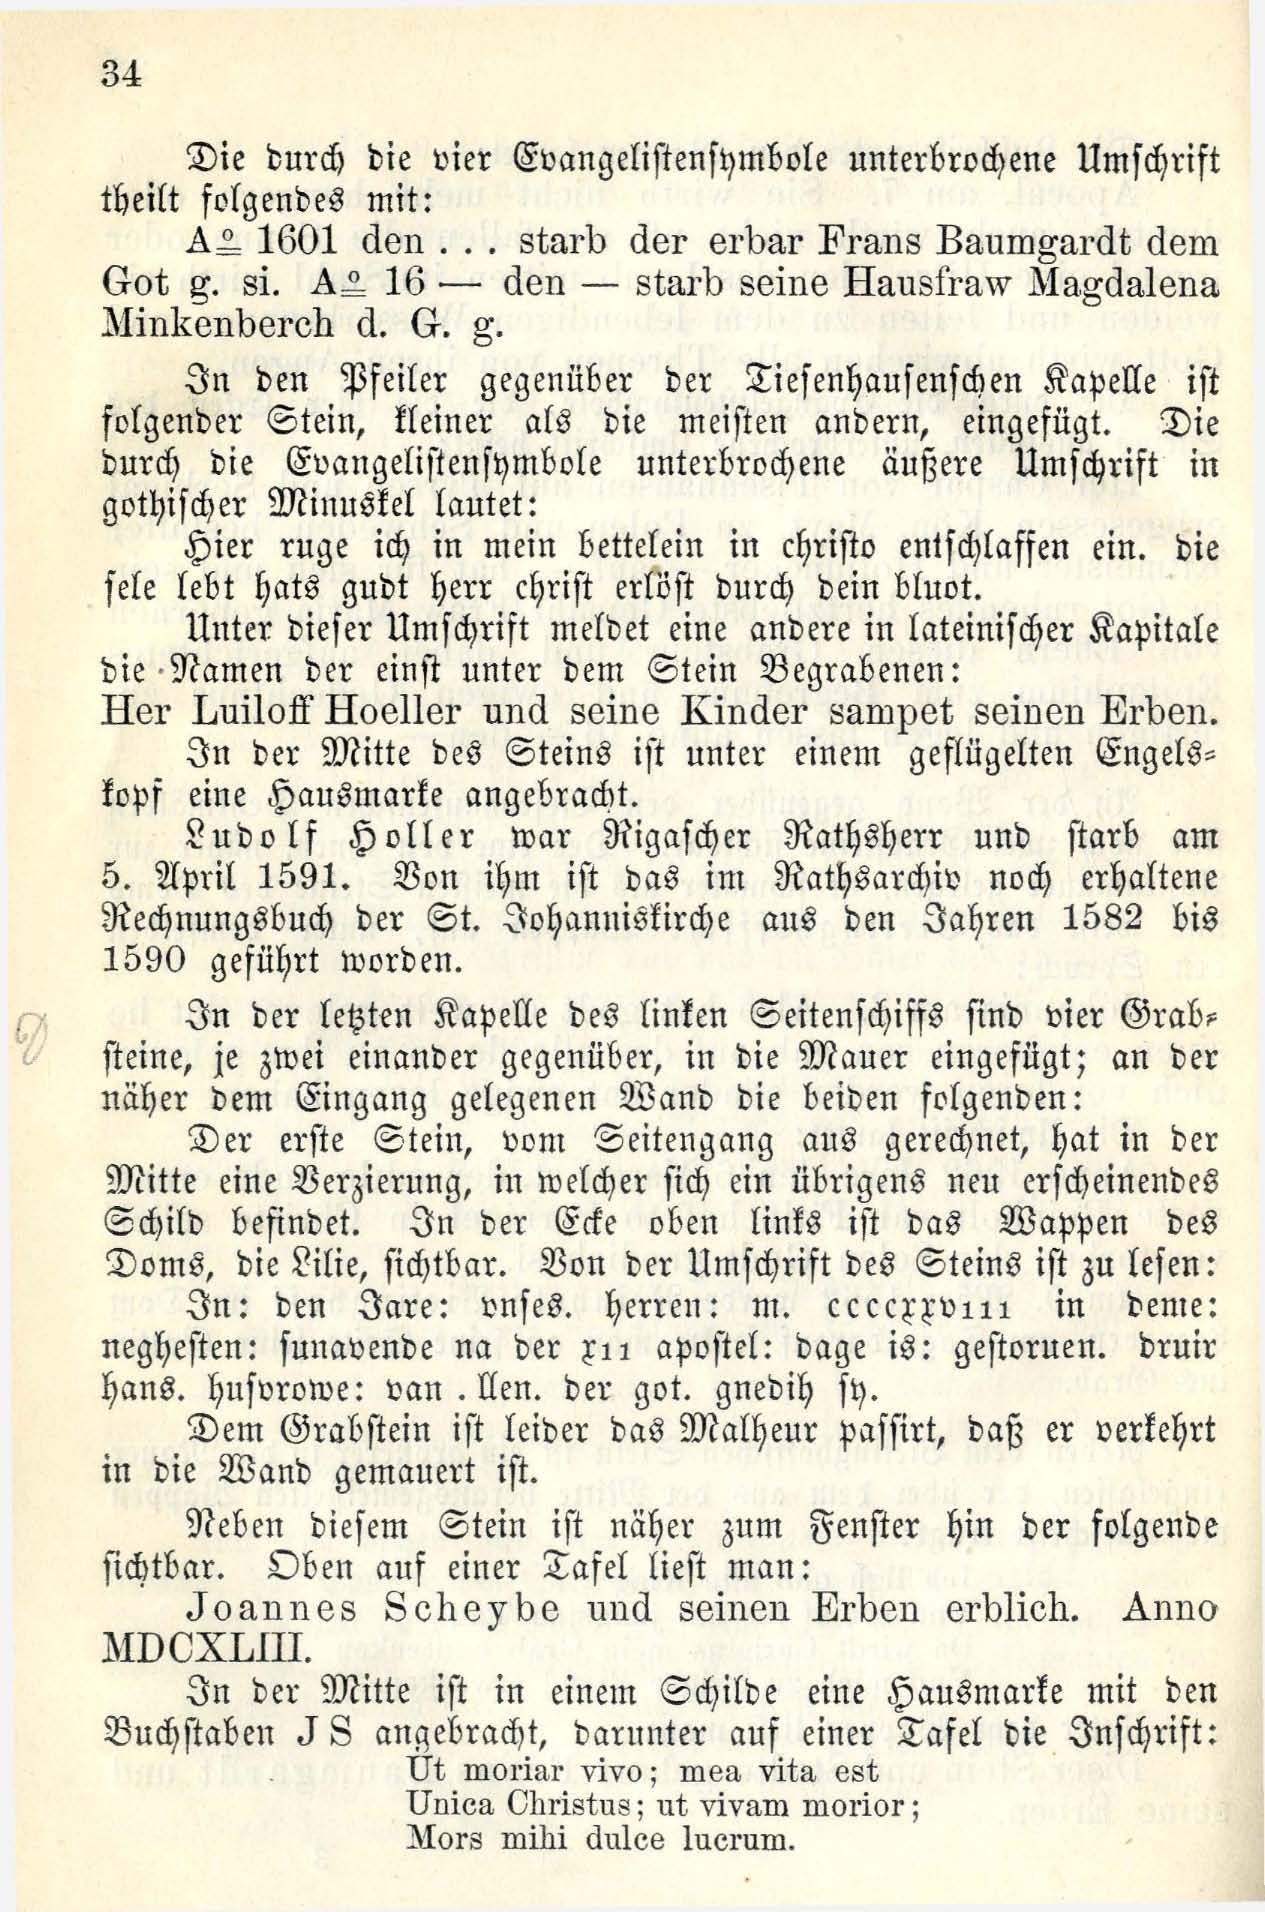 Denkmäler im Dom zu Riga (1885) | 35. Main body of text